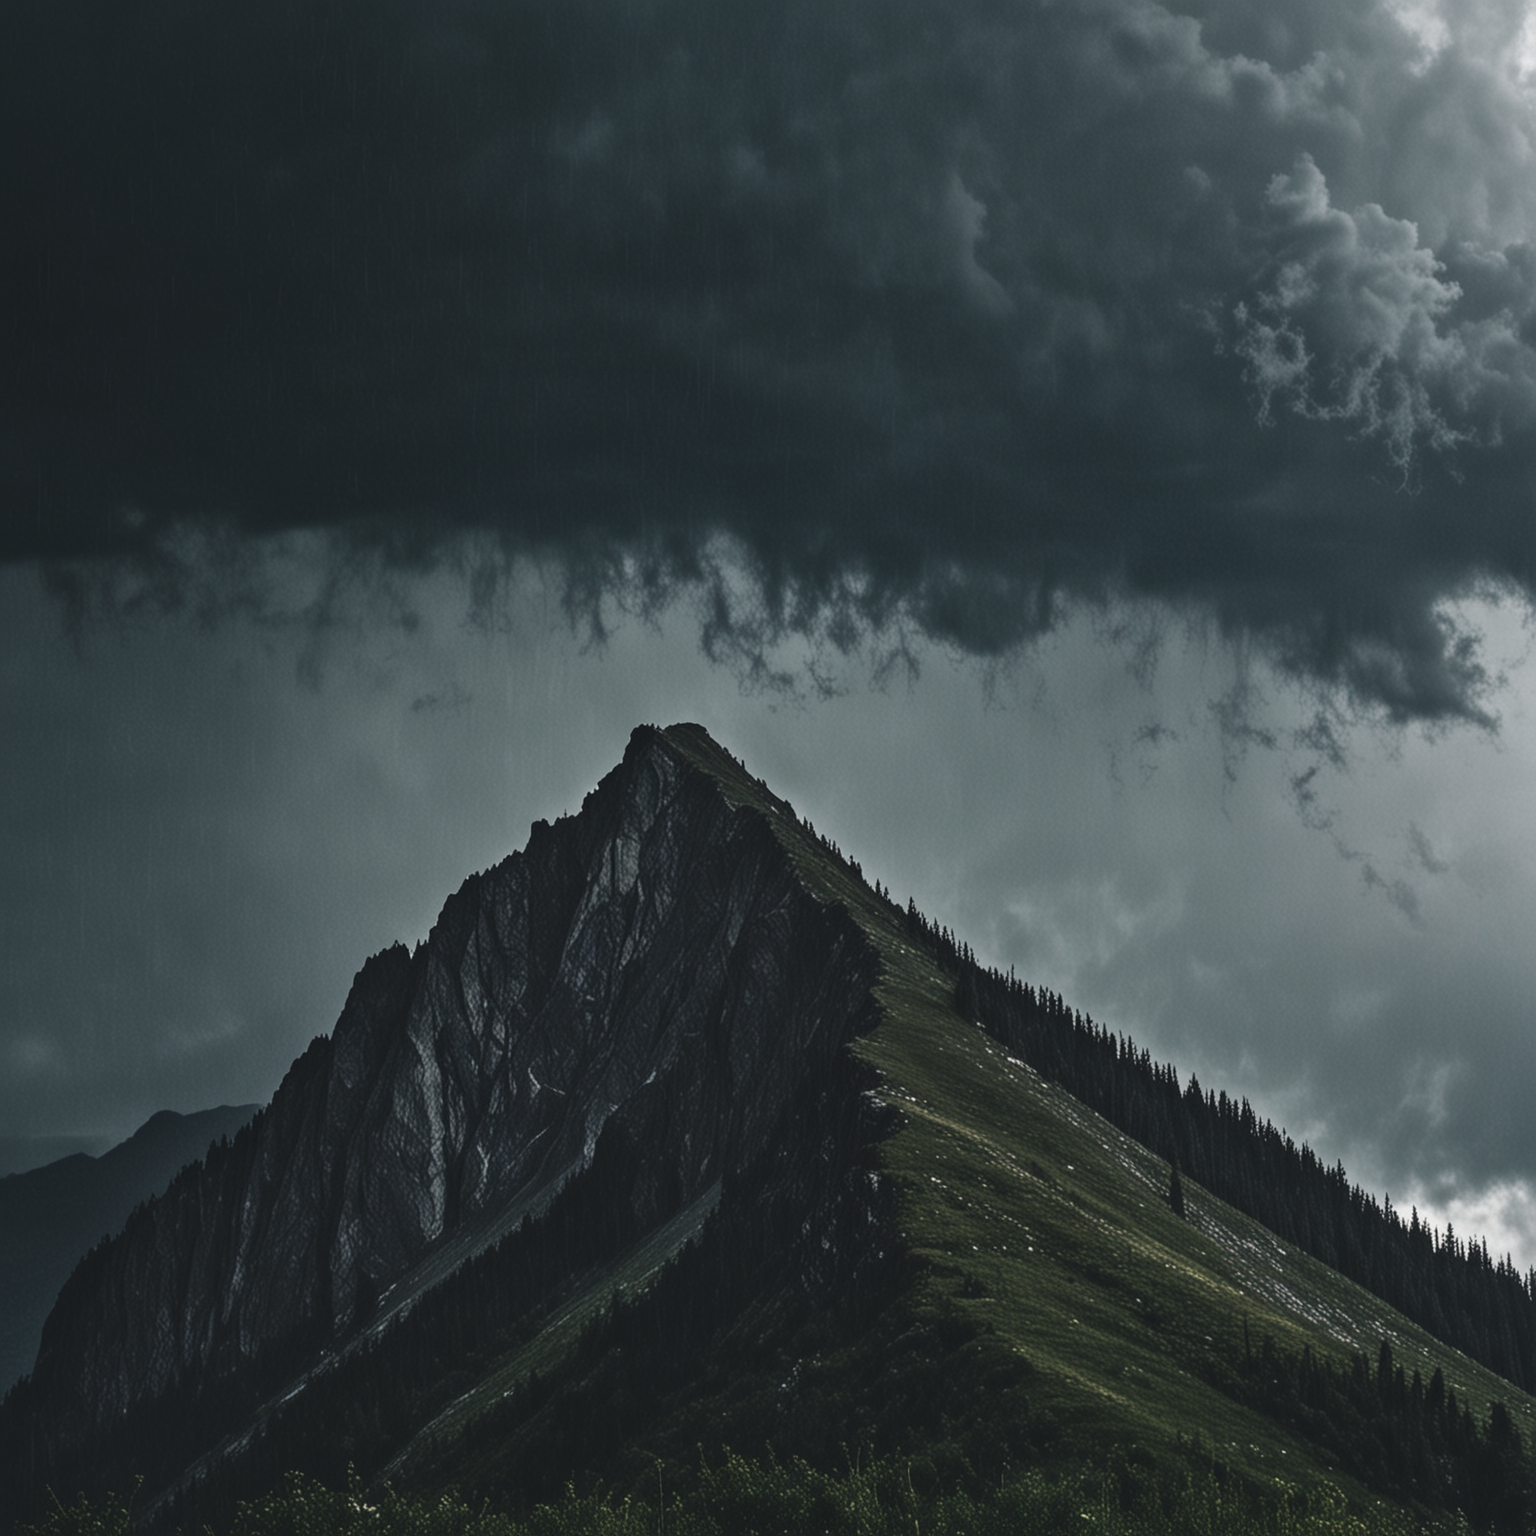 Mountain background, dark clouds, raining, storming